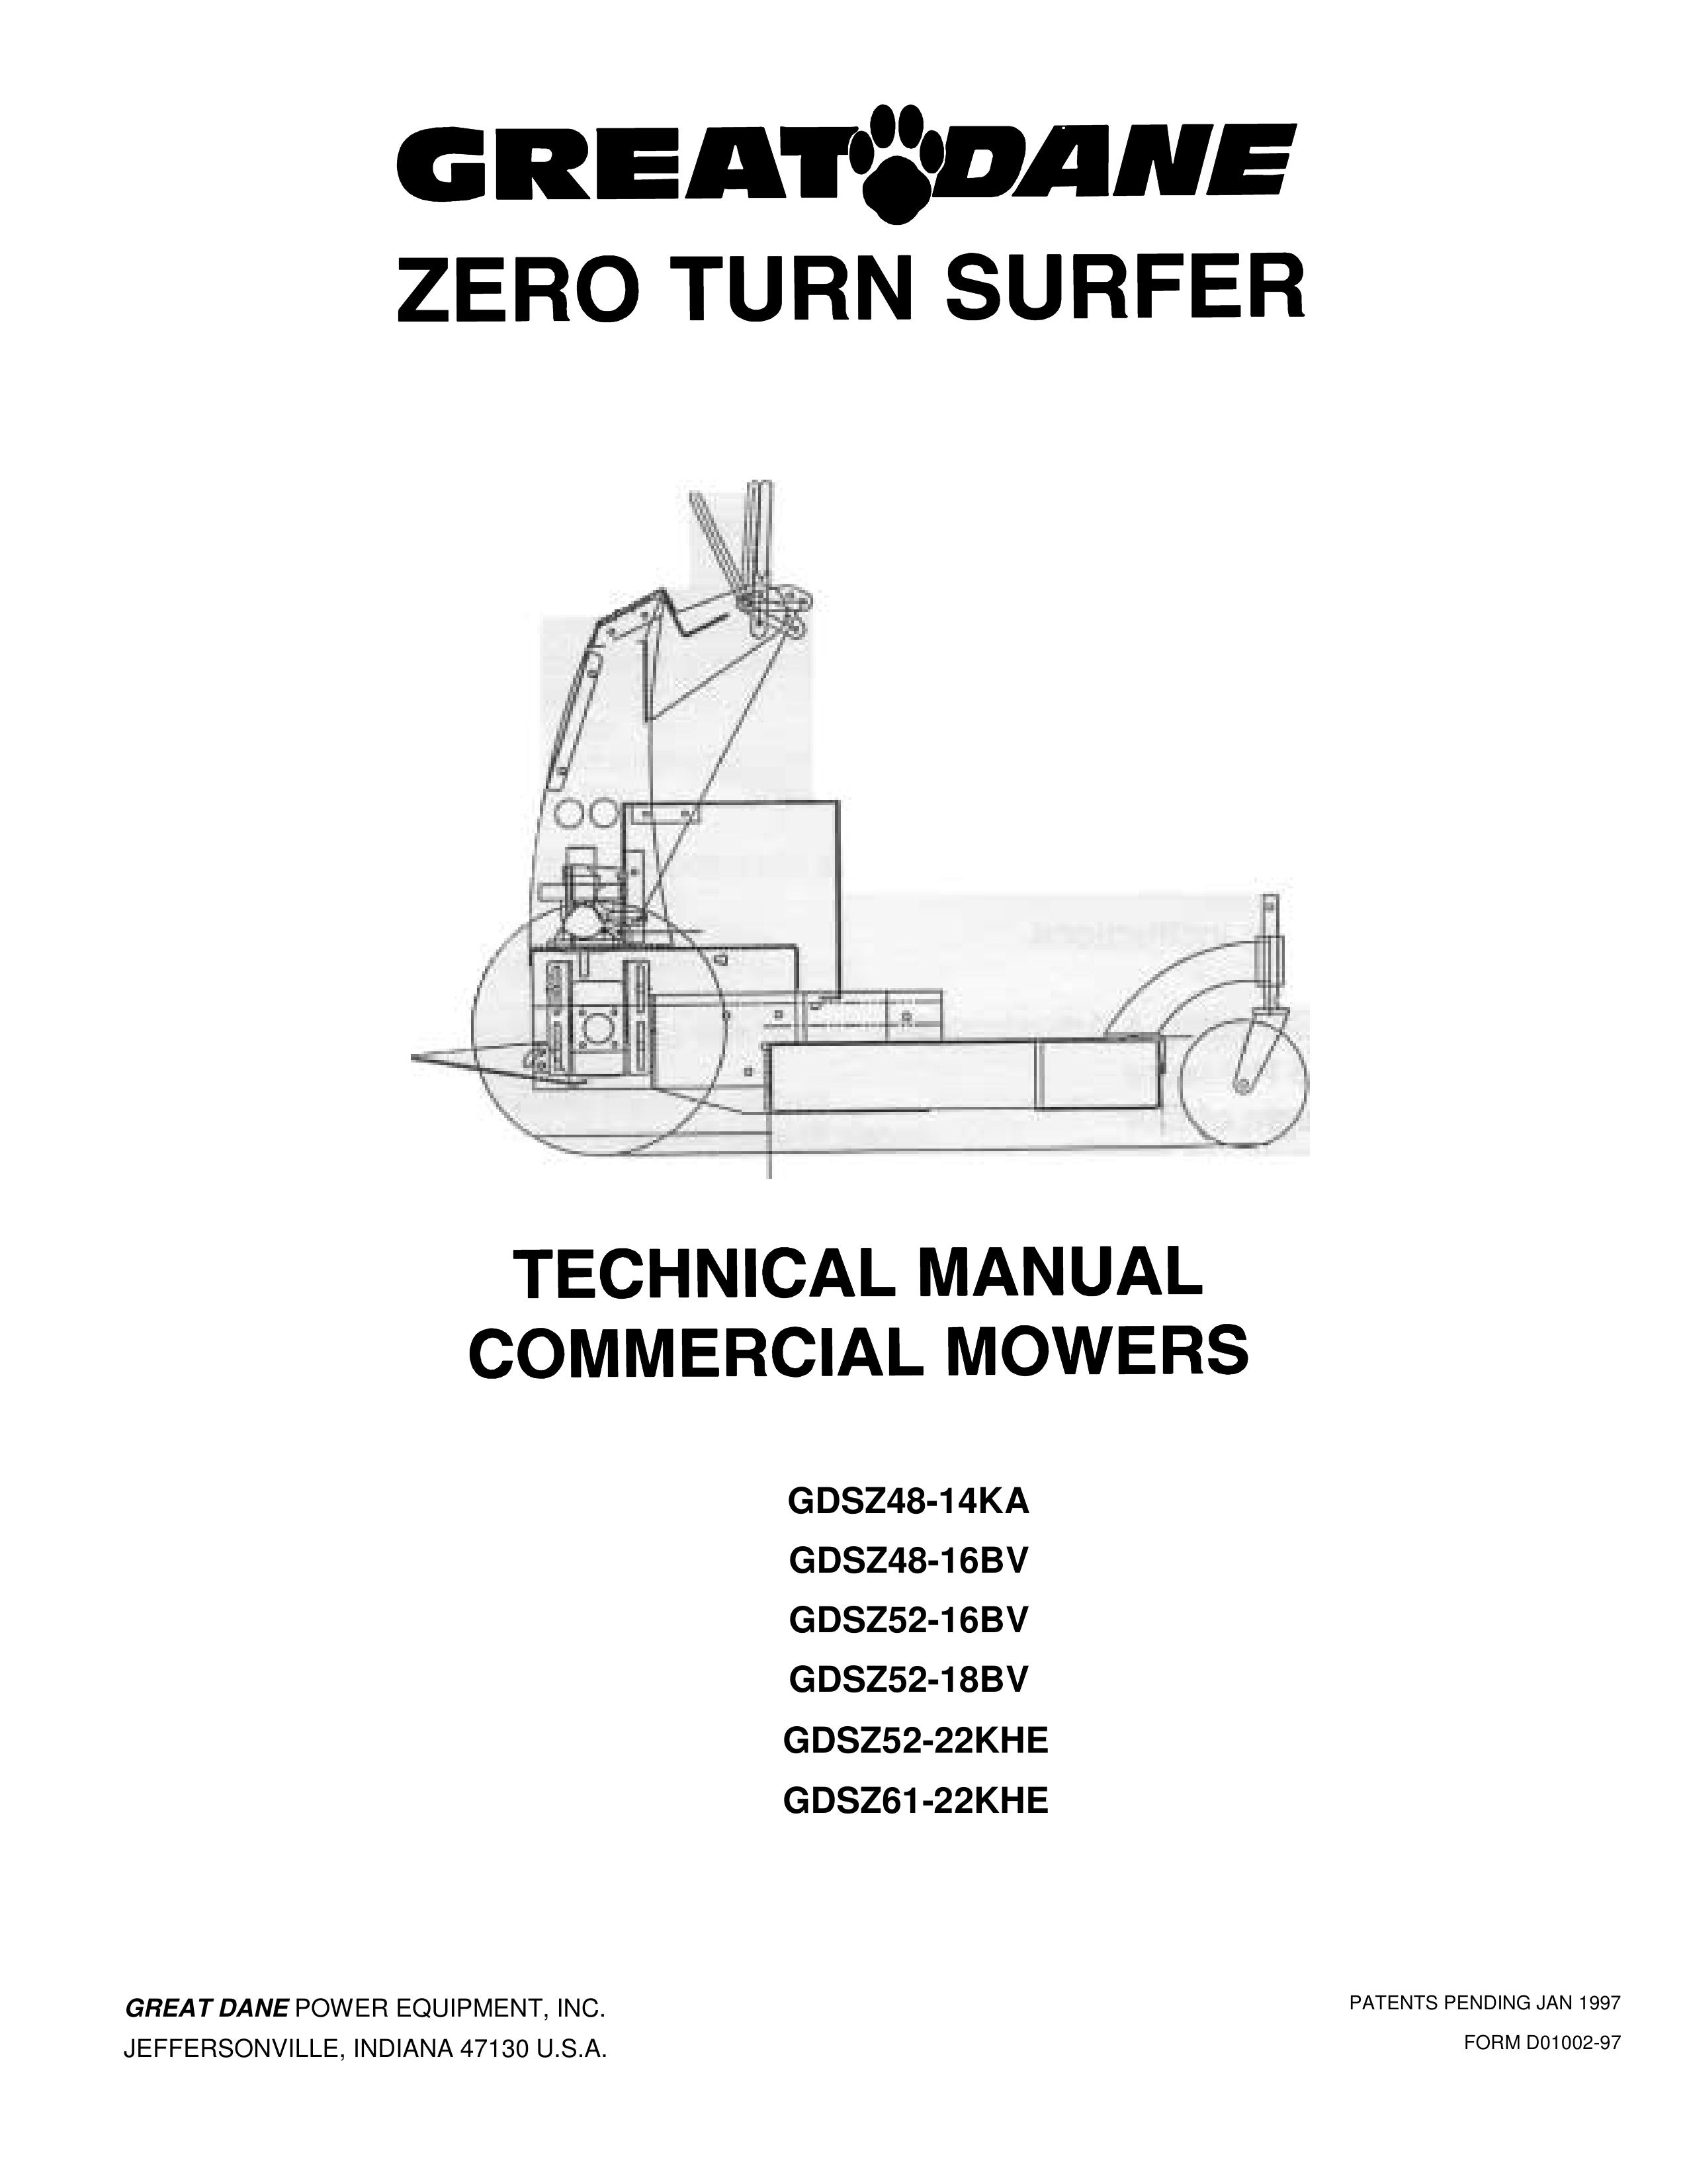 Great Dane GDSZ52-16BV Lawn Mower User Manual